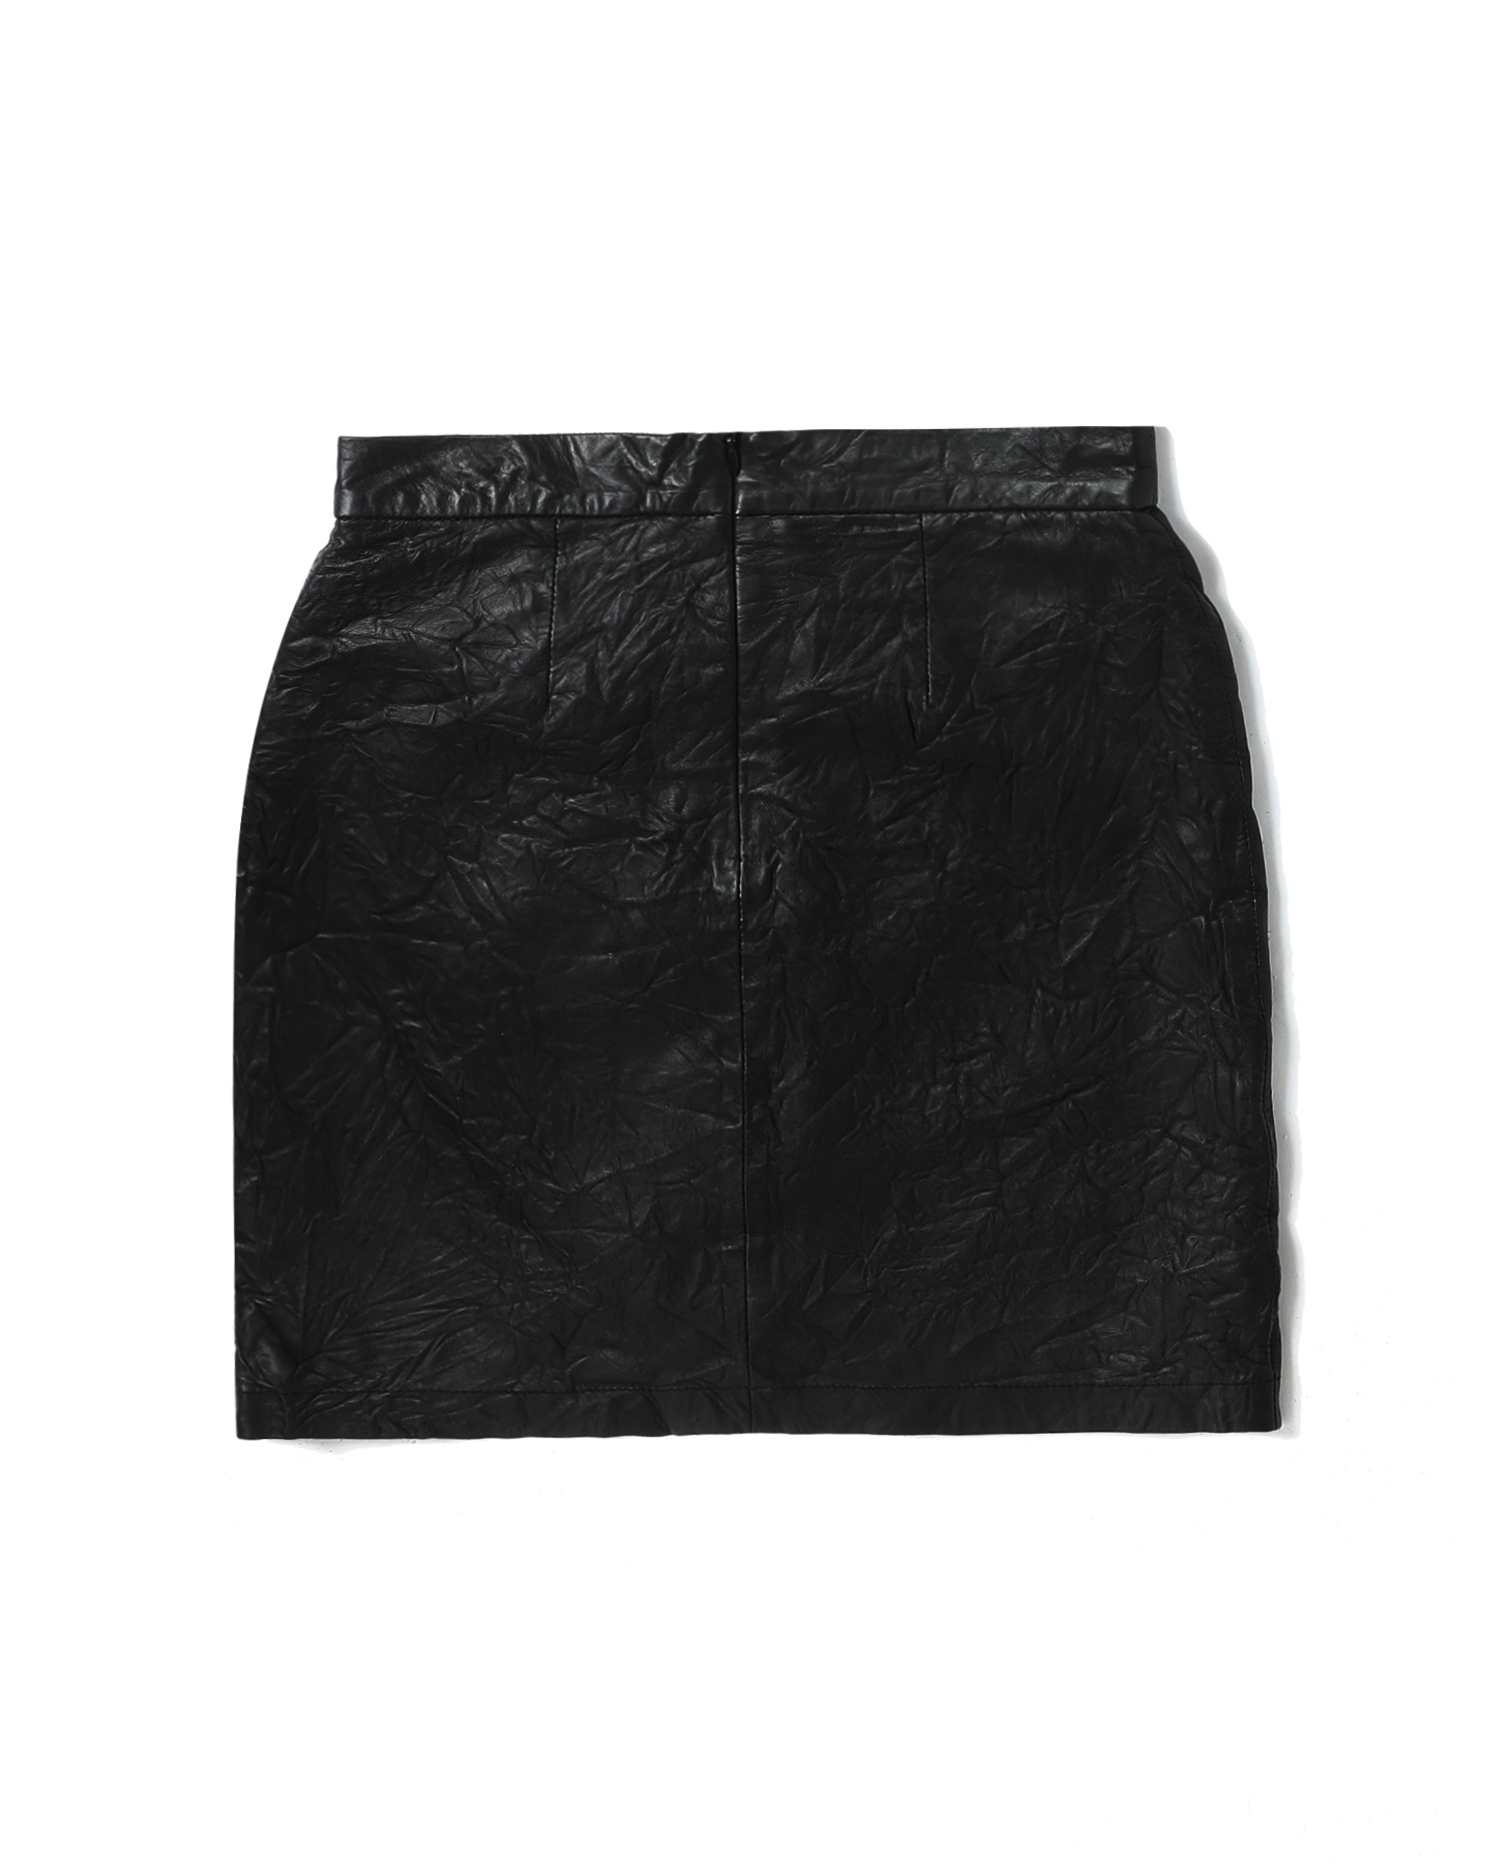 julipe crumpled leather skirt